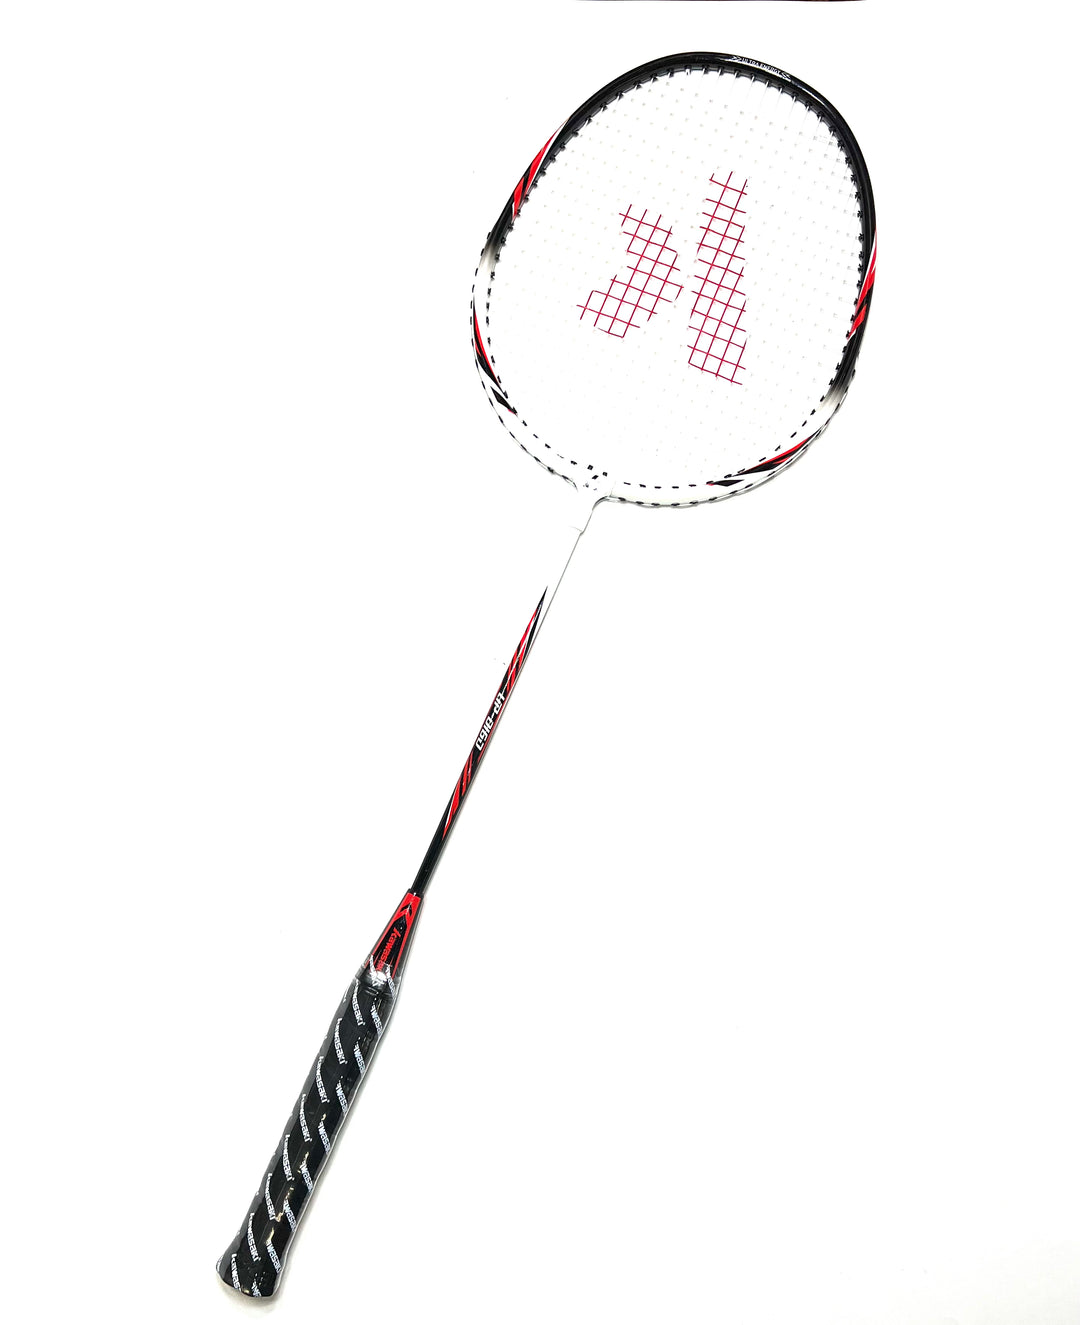 KAWASAKI UP-0160 UP-0182 Badminton Racket Strung Red Yellow Blud Purple